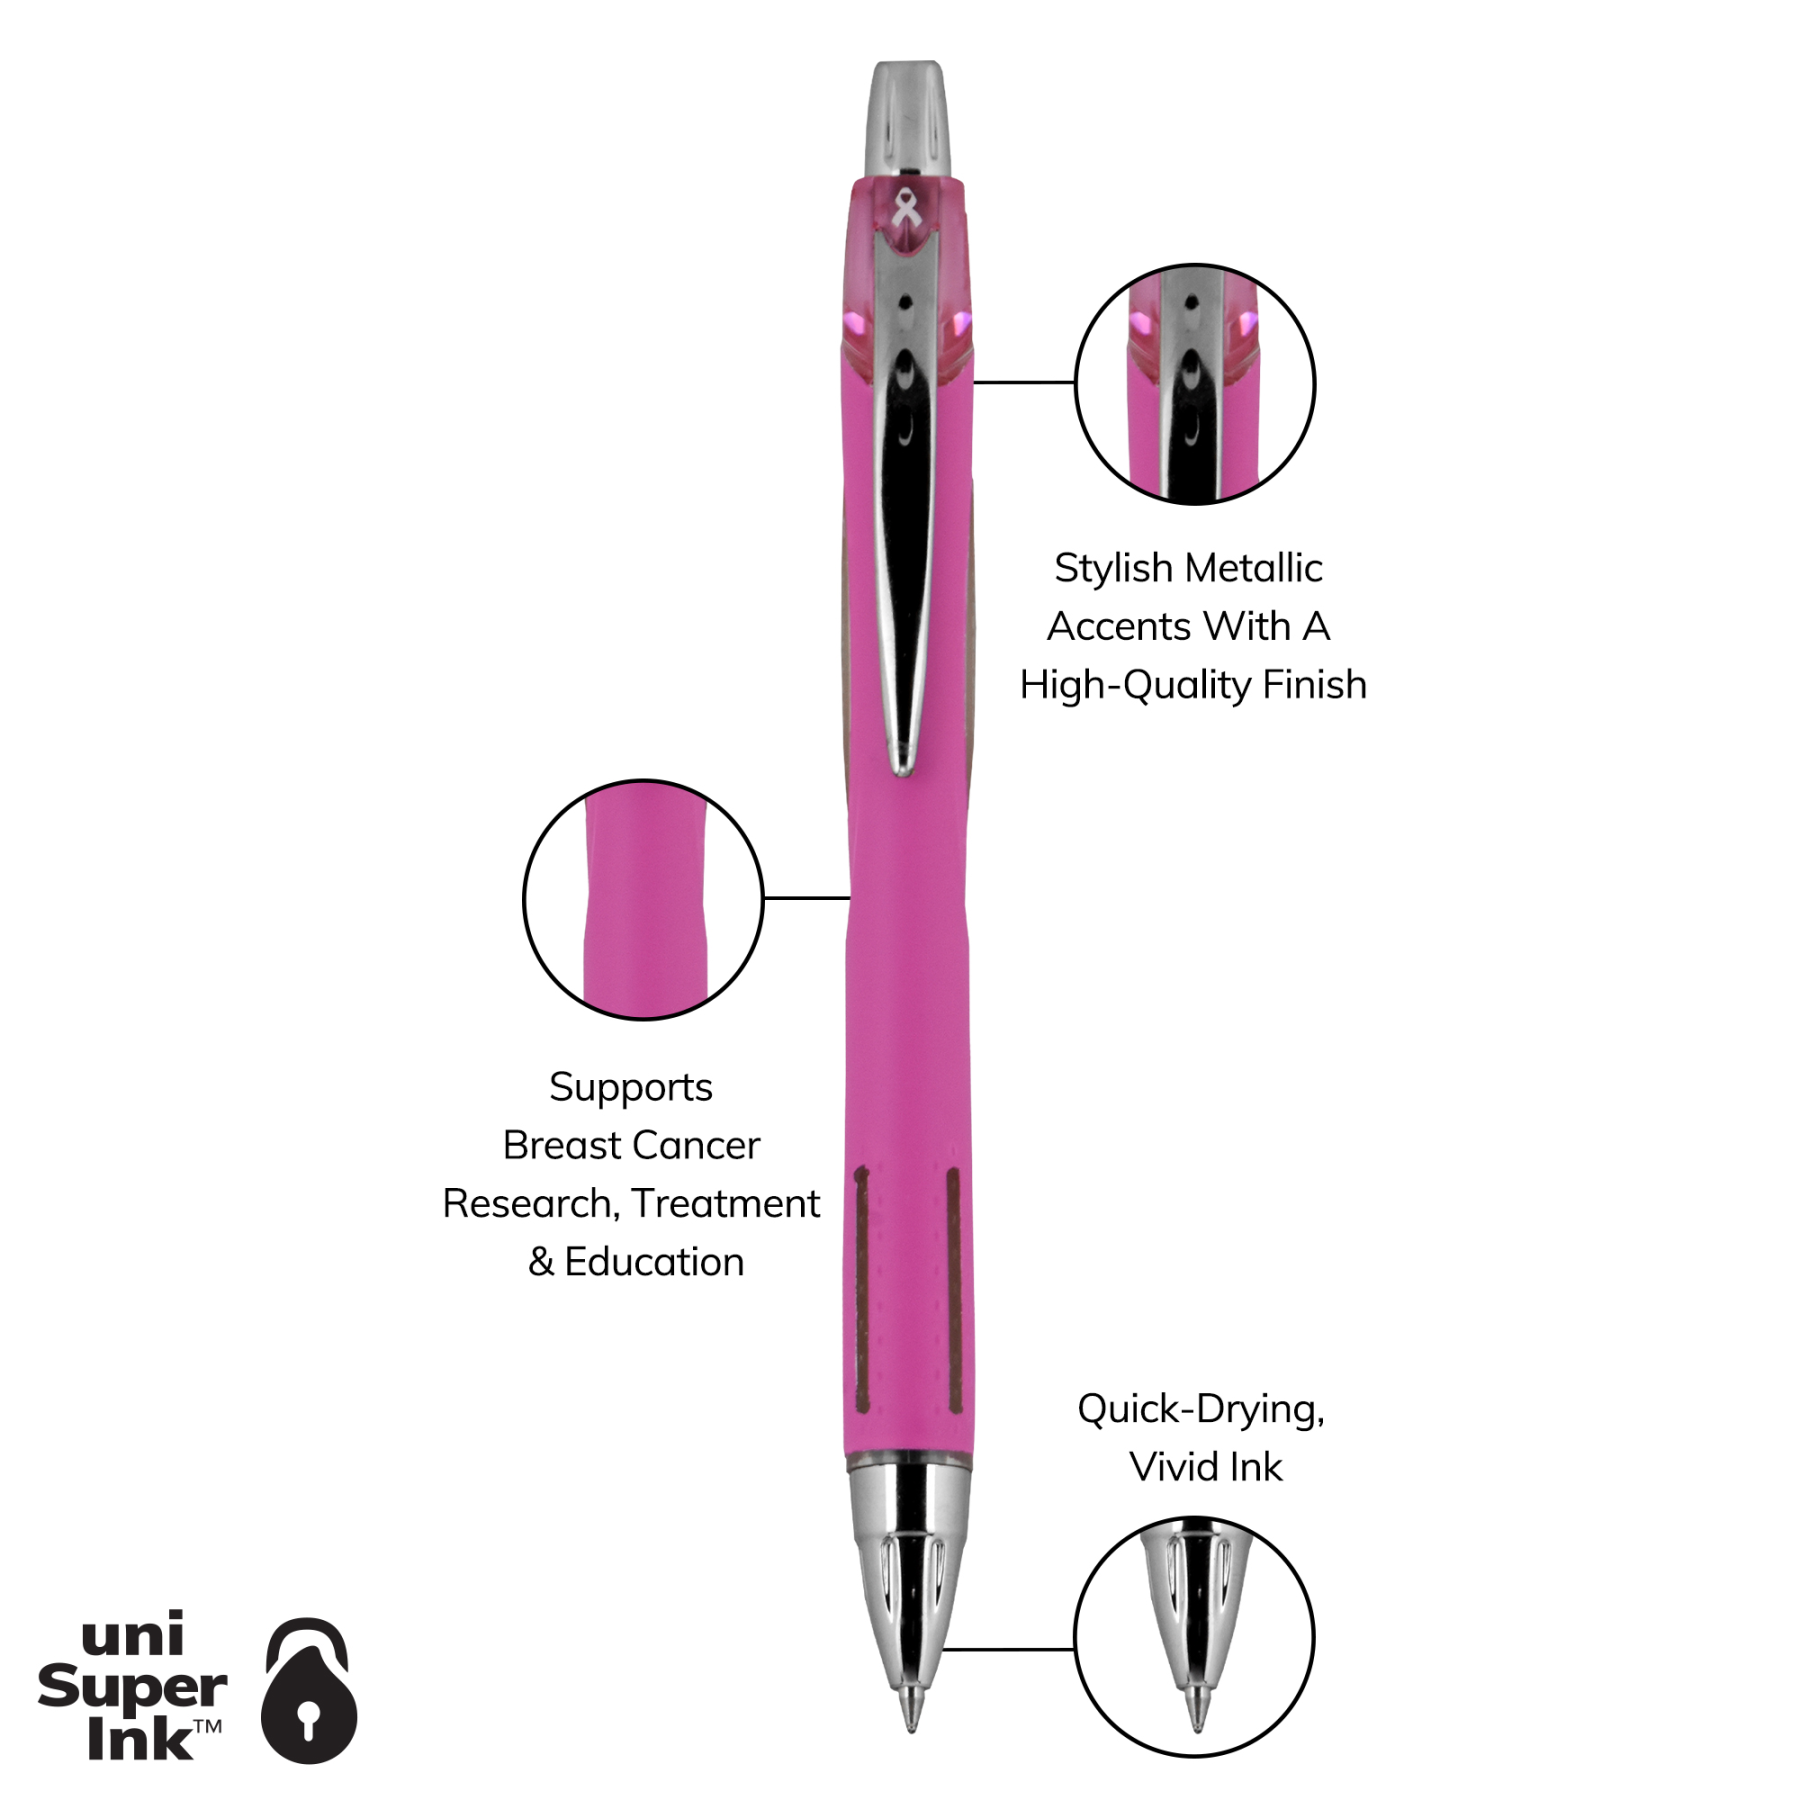 uniball™ JETSTREAM RT Pink Ribbon, Ballpoint Pen